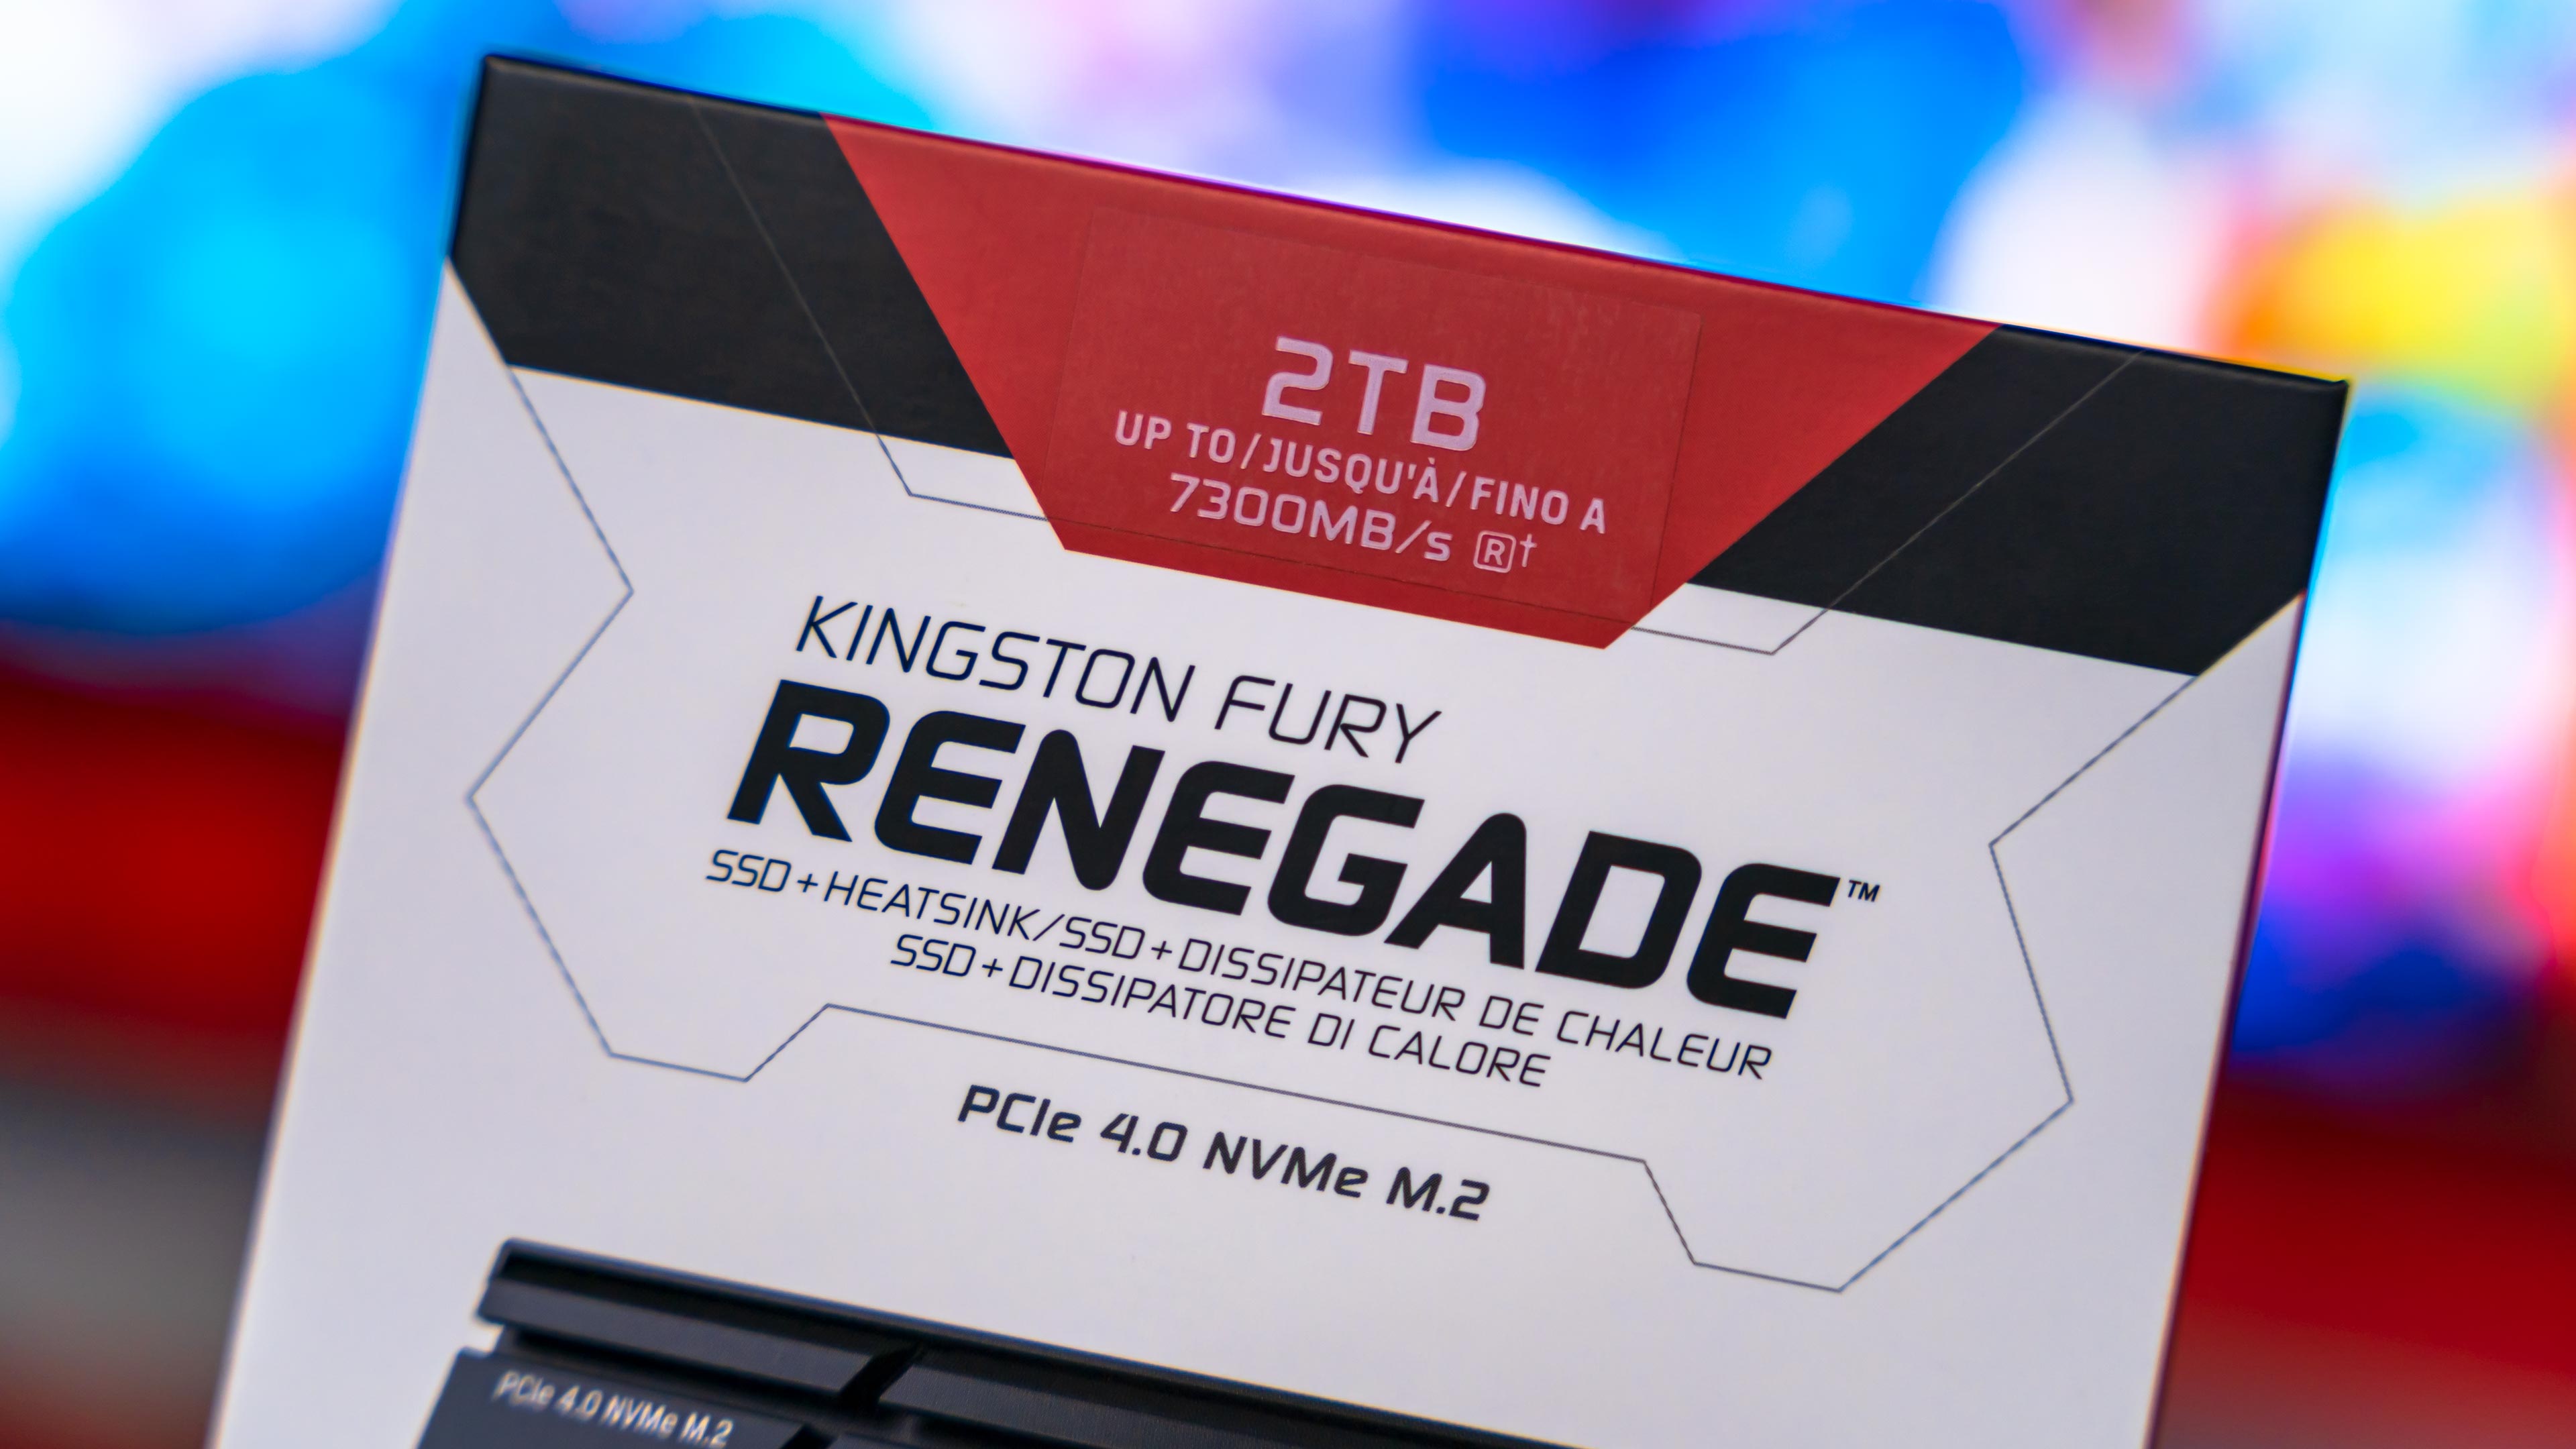 Kingston Fury Renegade 2TB Heatsink Box (2)